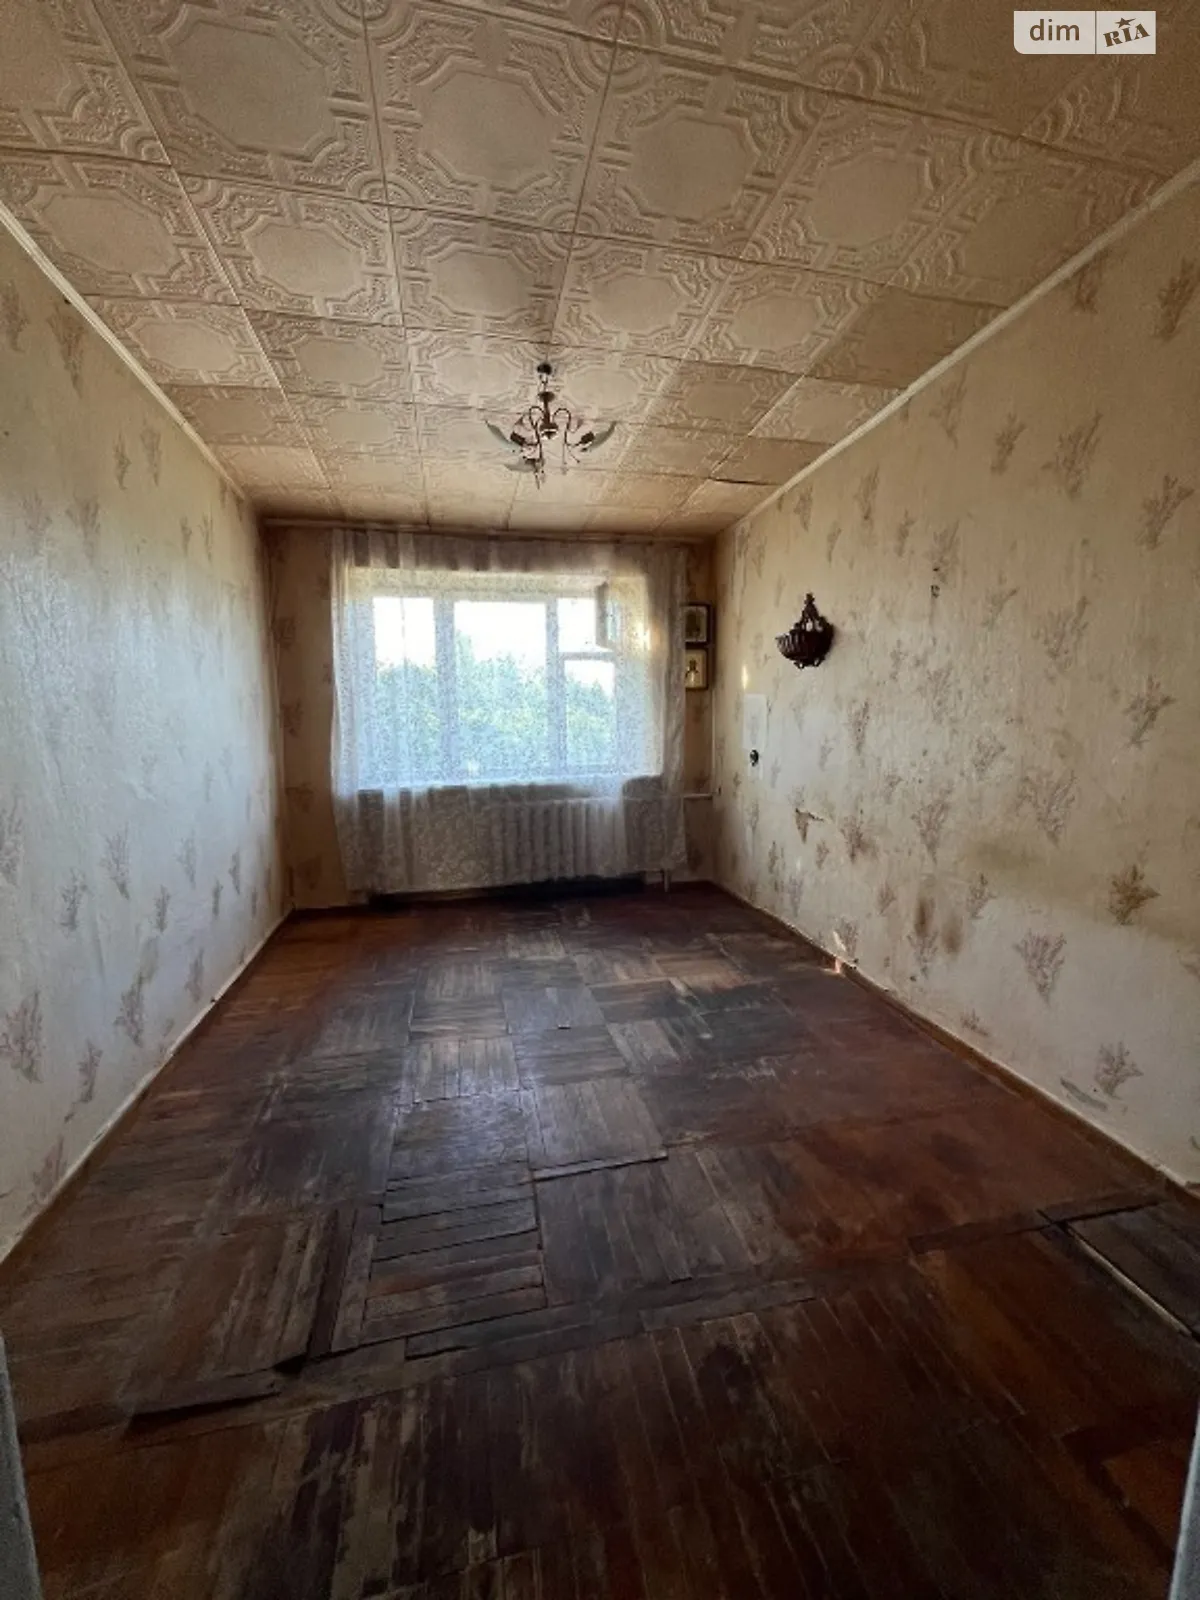 Продается комната 12 кв. м в Одессе, цена: 6500 $ - фото 1